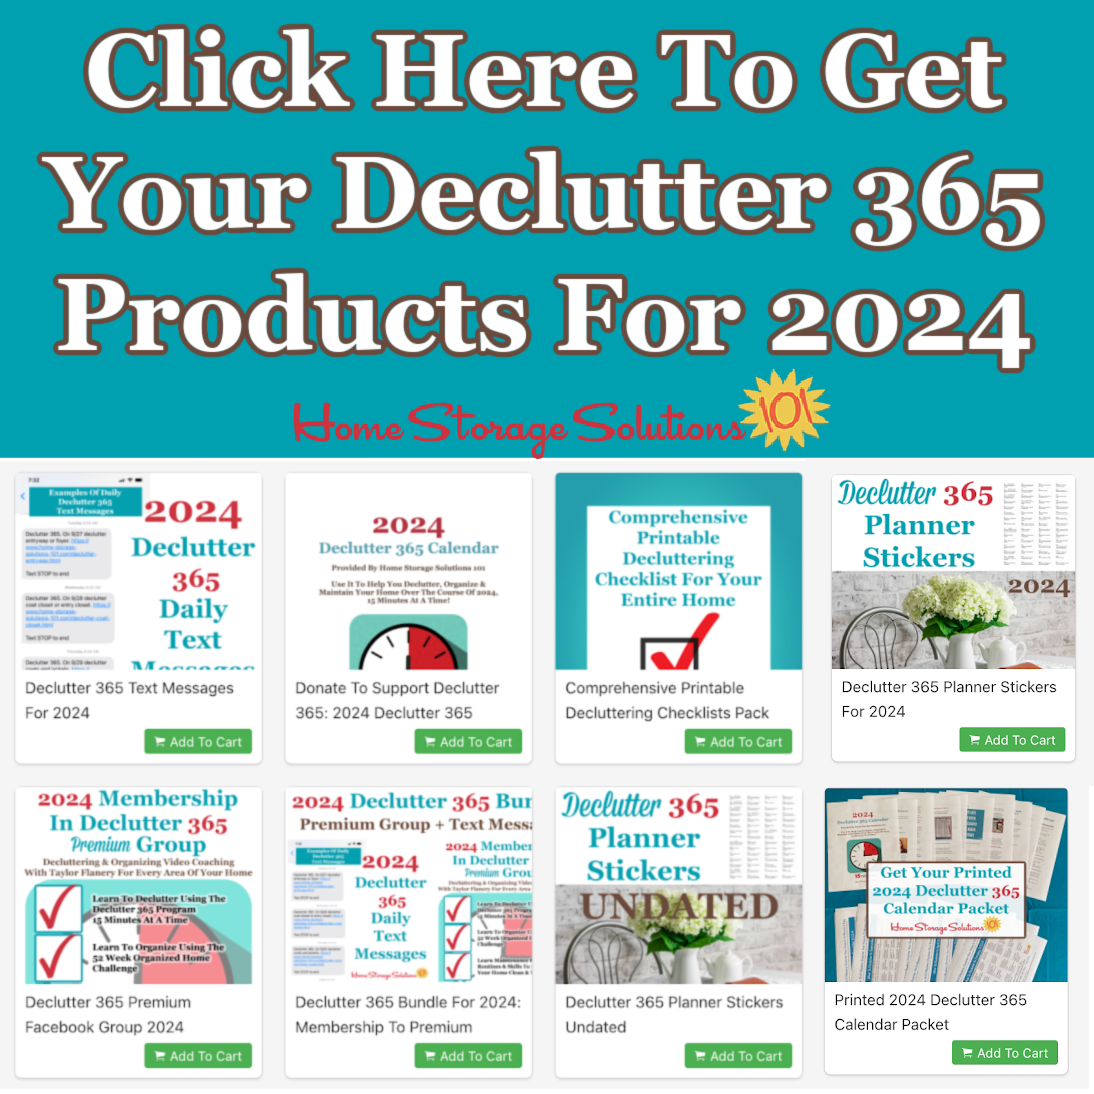 47 Kitchen Organization Ideas That Declutter Cabinets, Countertops